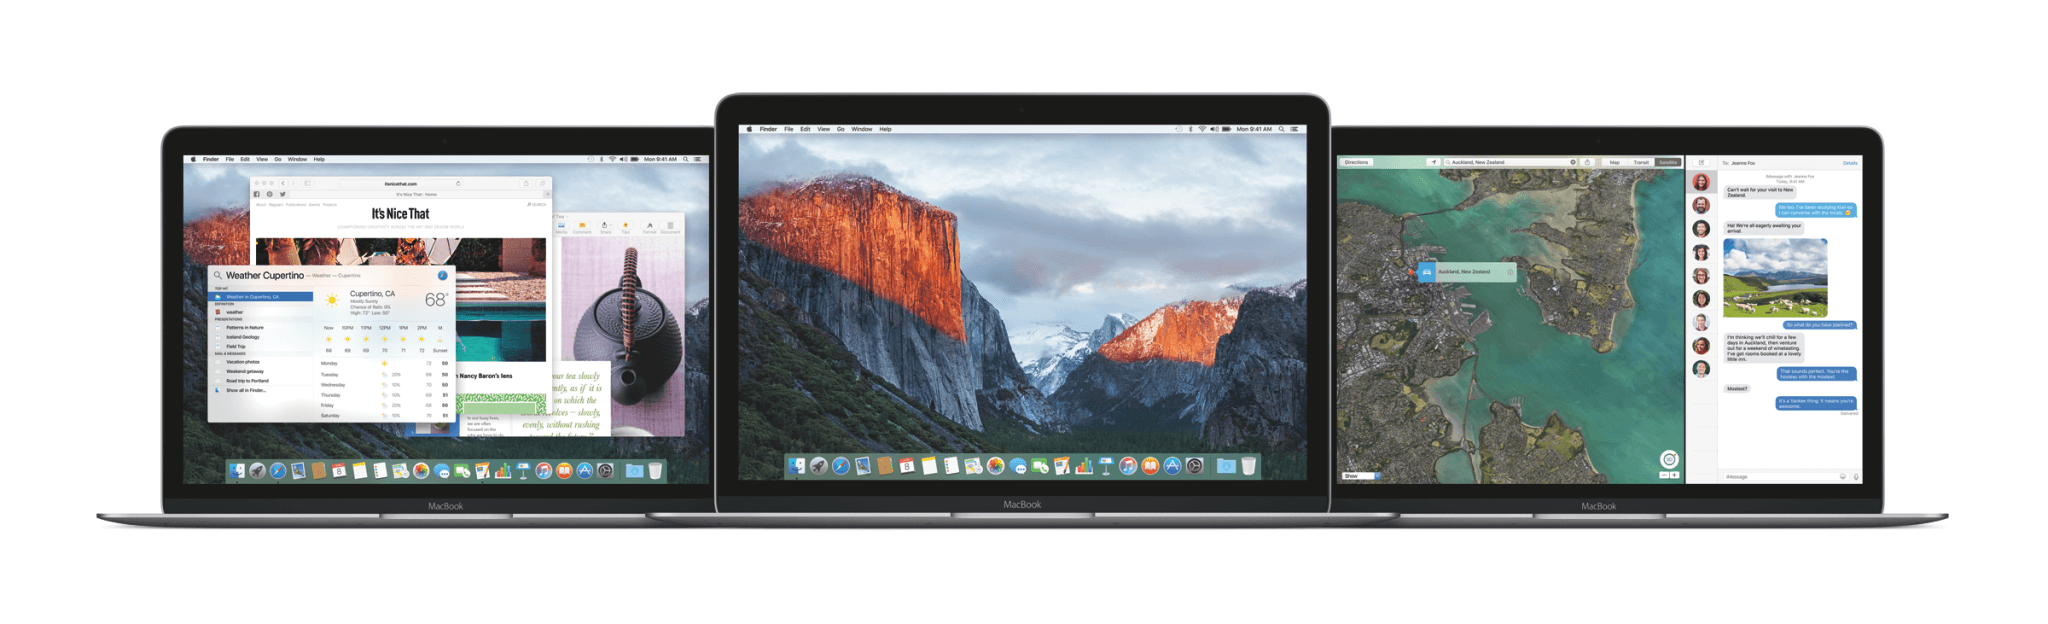 OS X 10.11 El Capitan (Bildrechte: Apple)